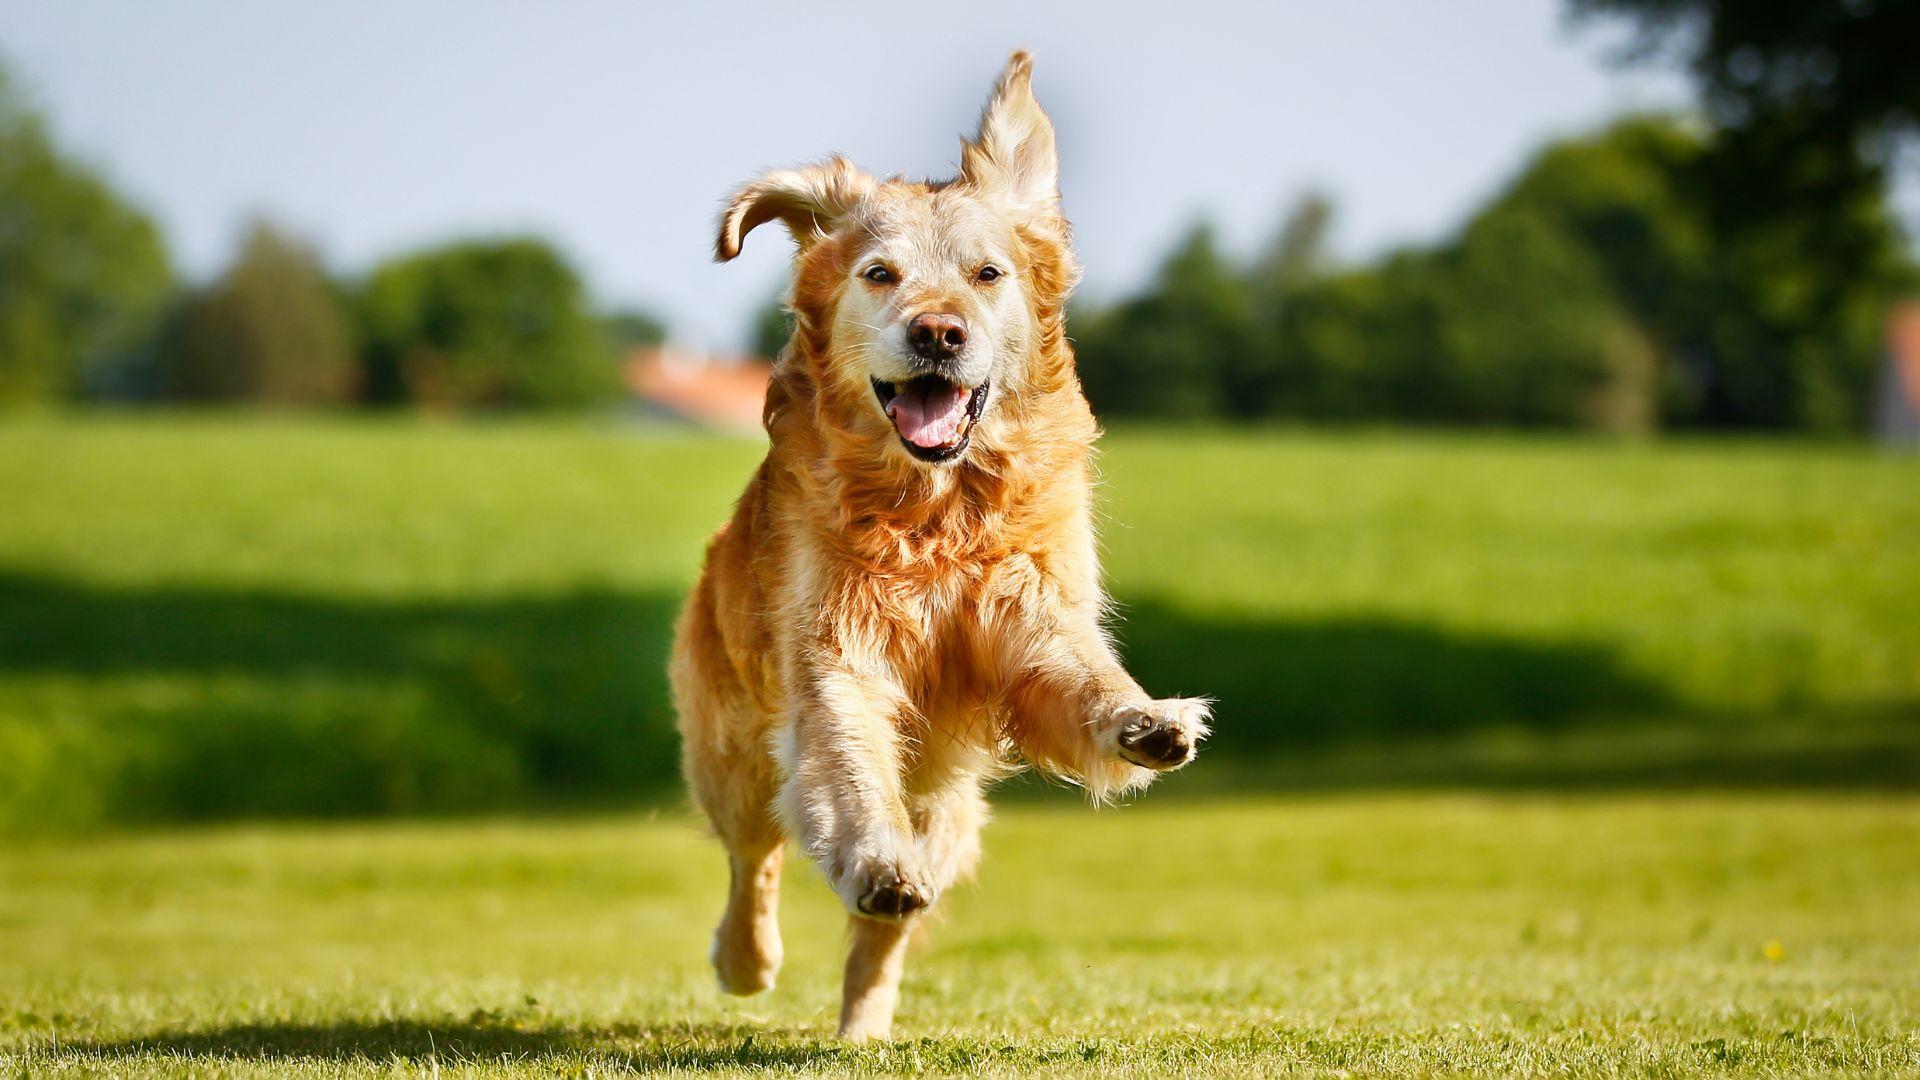 Leap year: A golden retriever dog leaping across a green field.